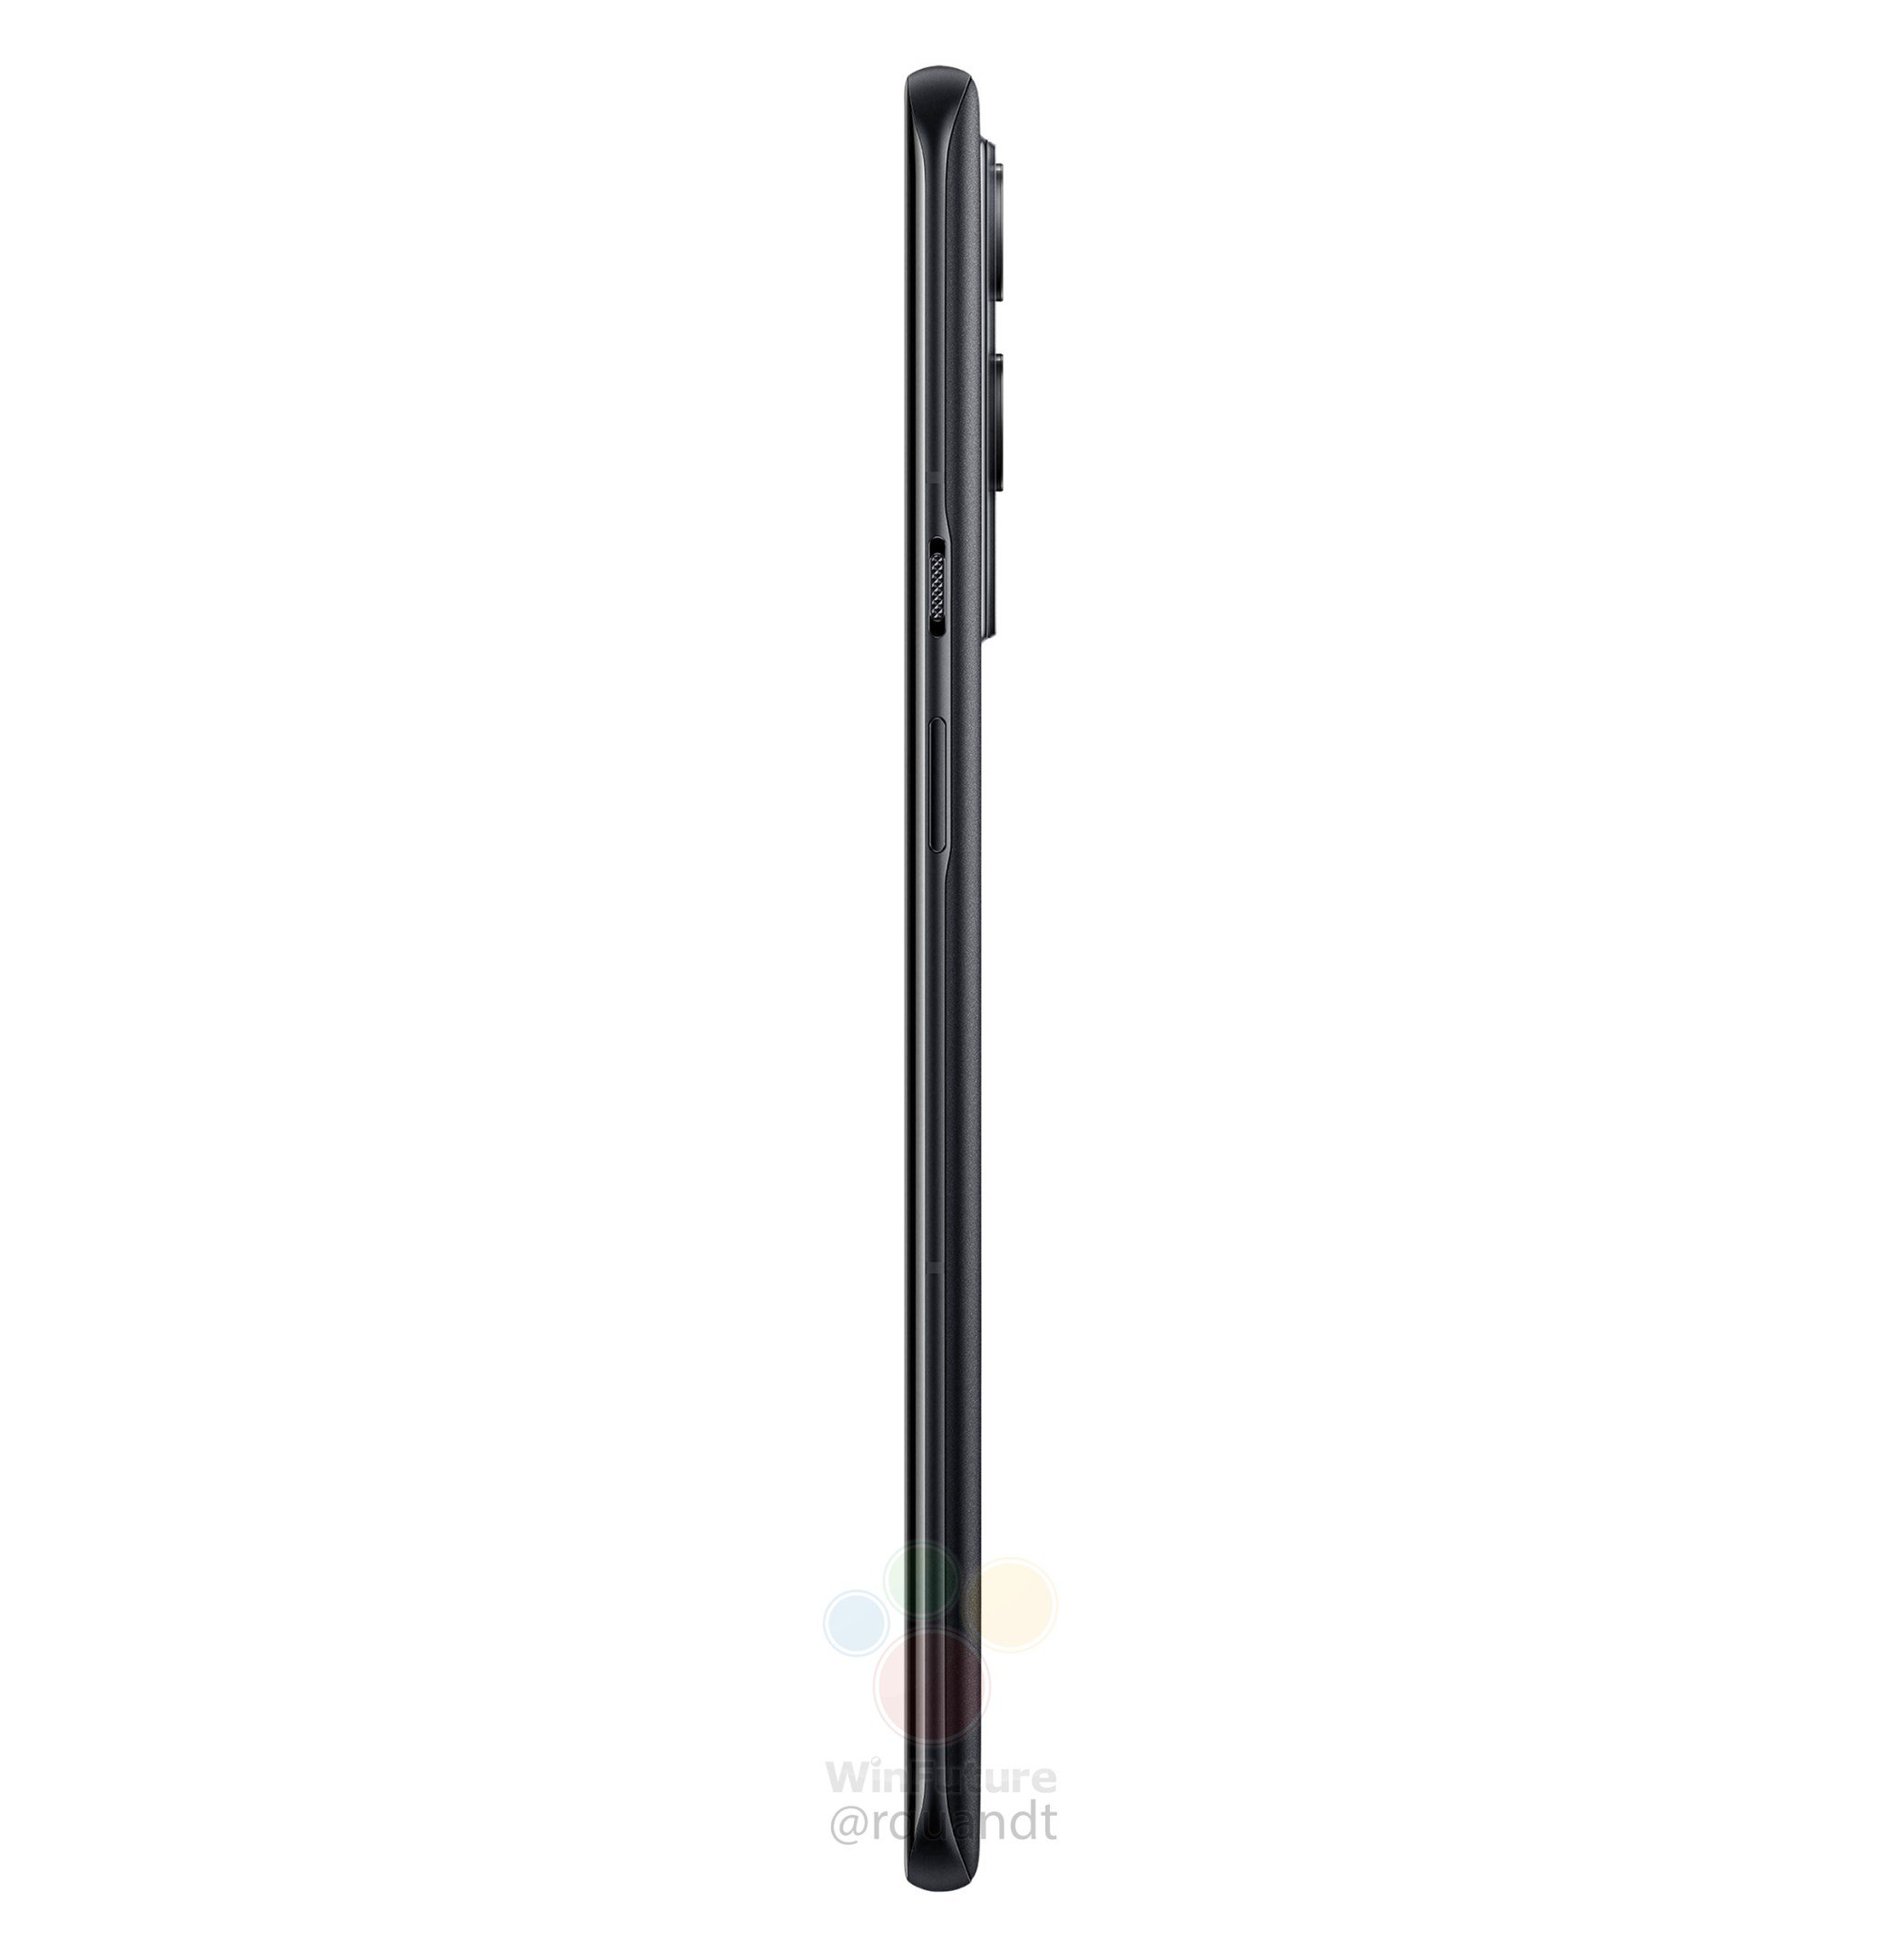 OnePlus-9-Pro-1615403799-0-0.jpg